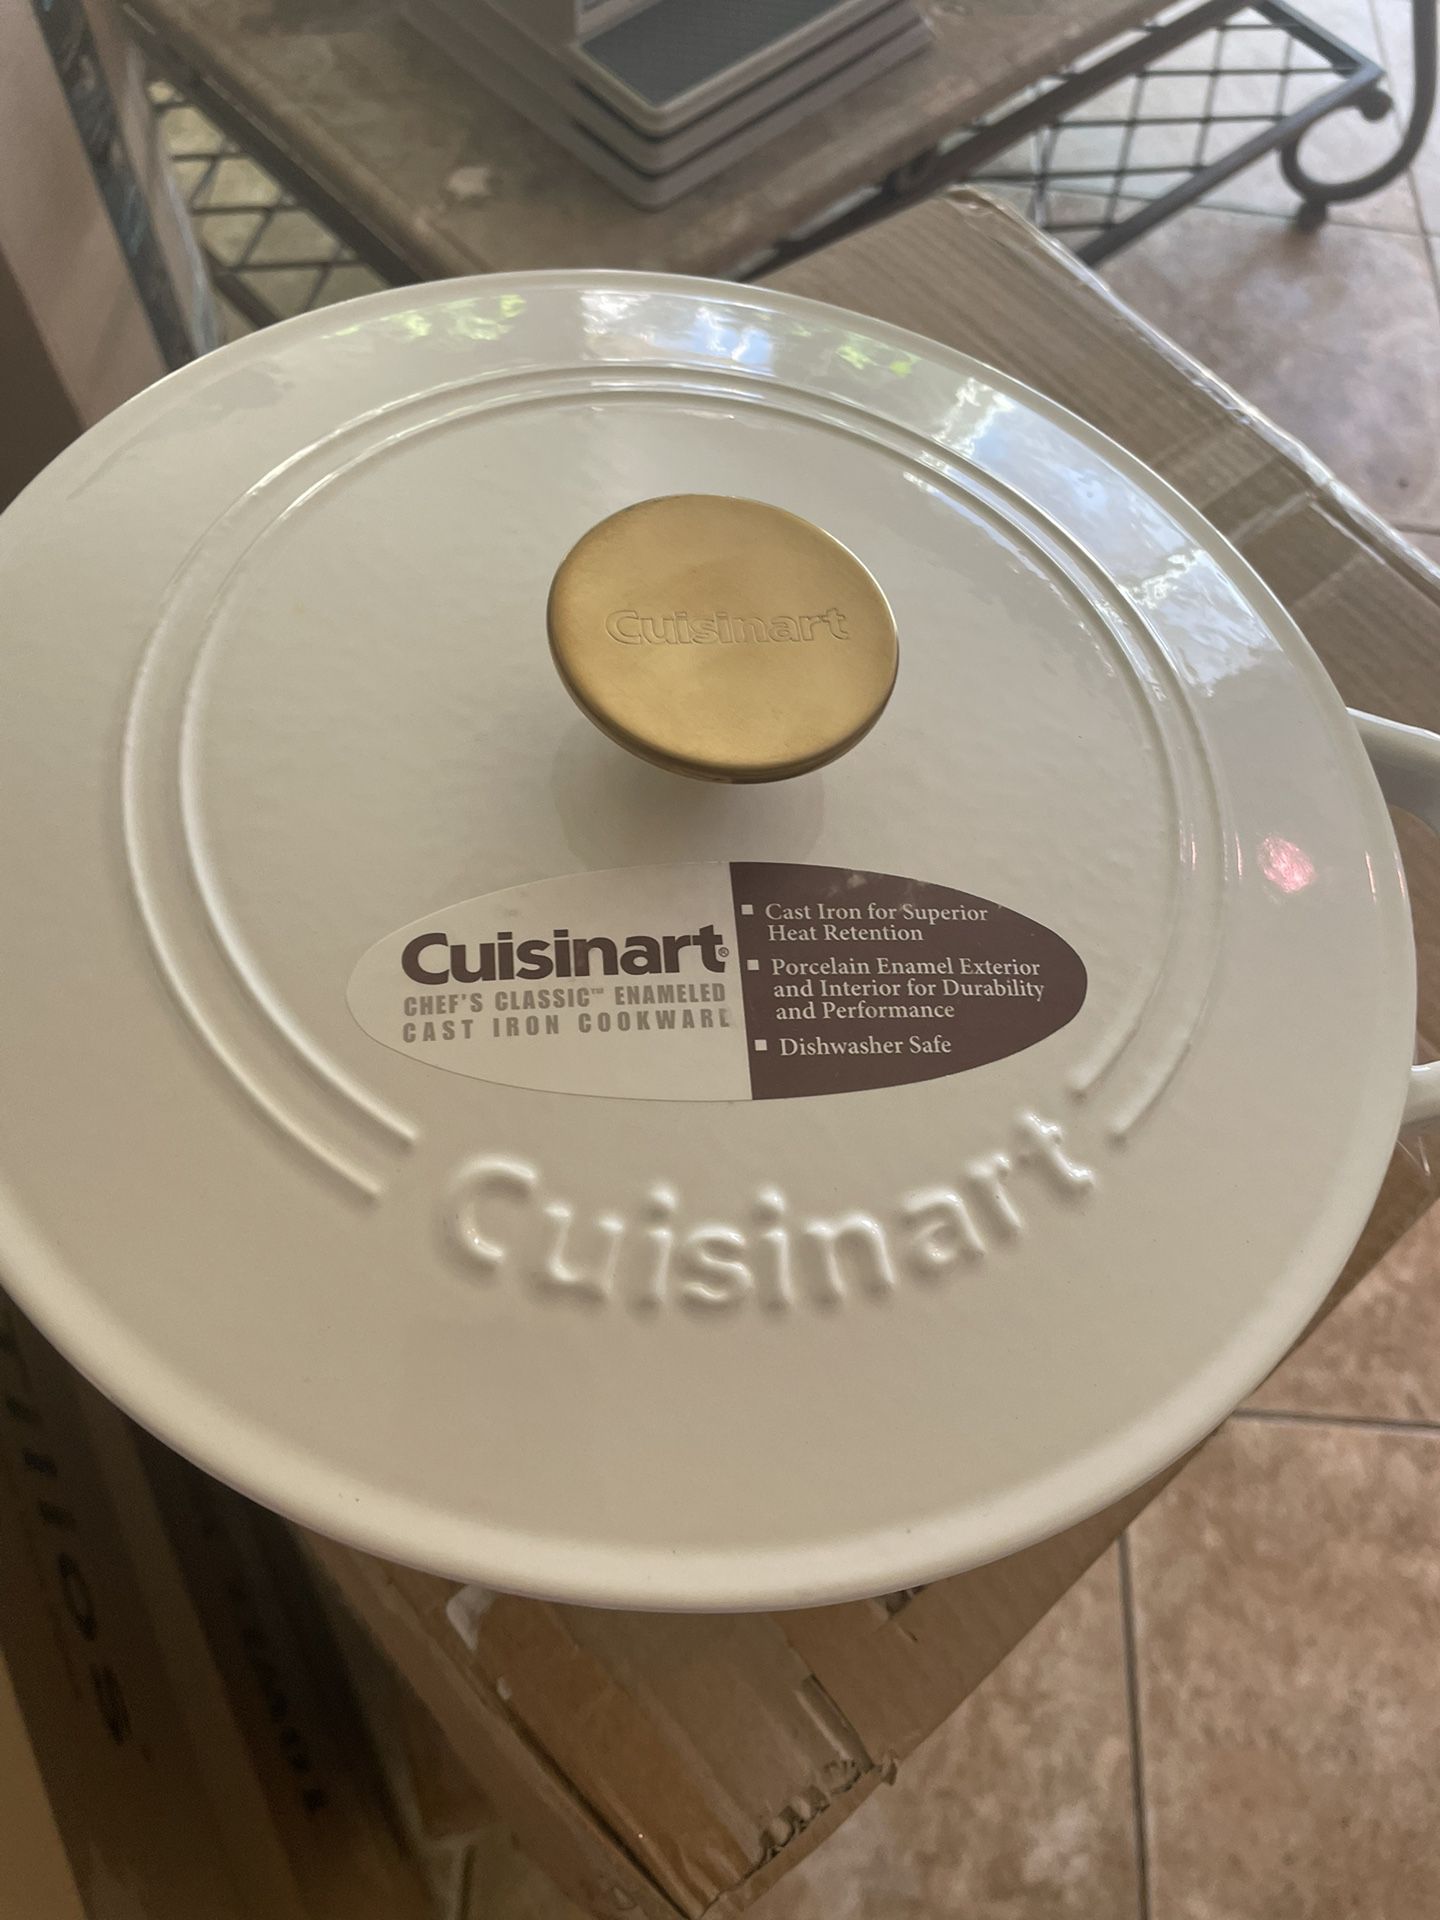  Cuisinart Chef's Classic Enameled Cast Iron 5-Quart